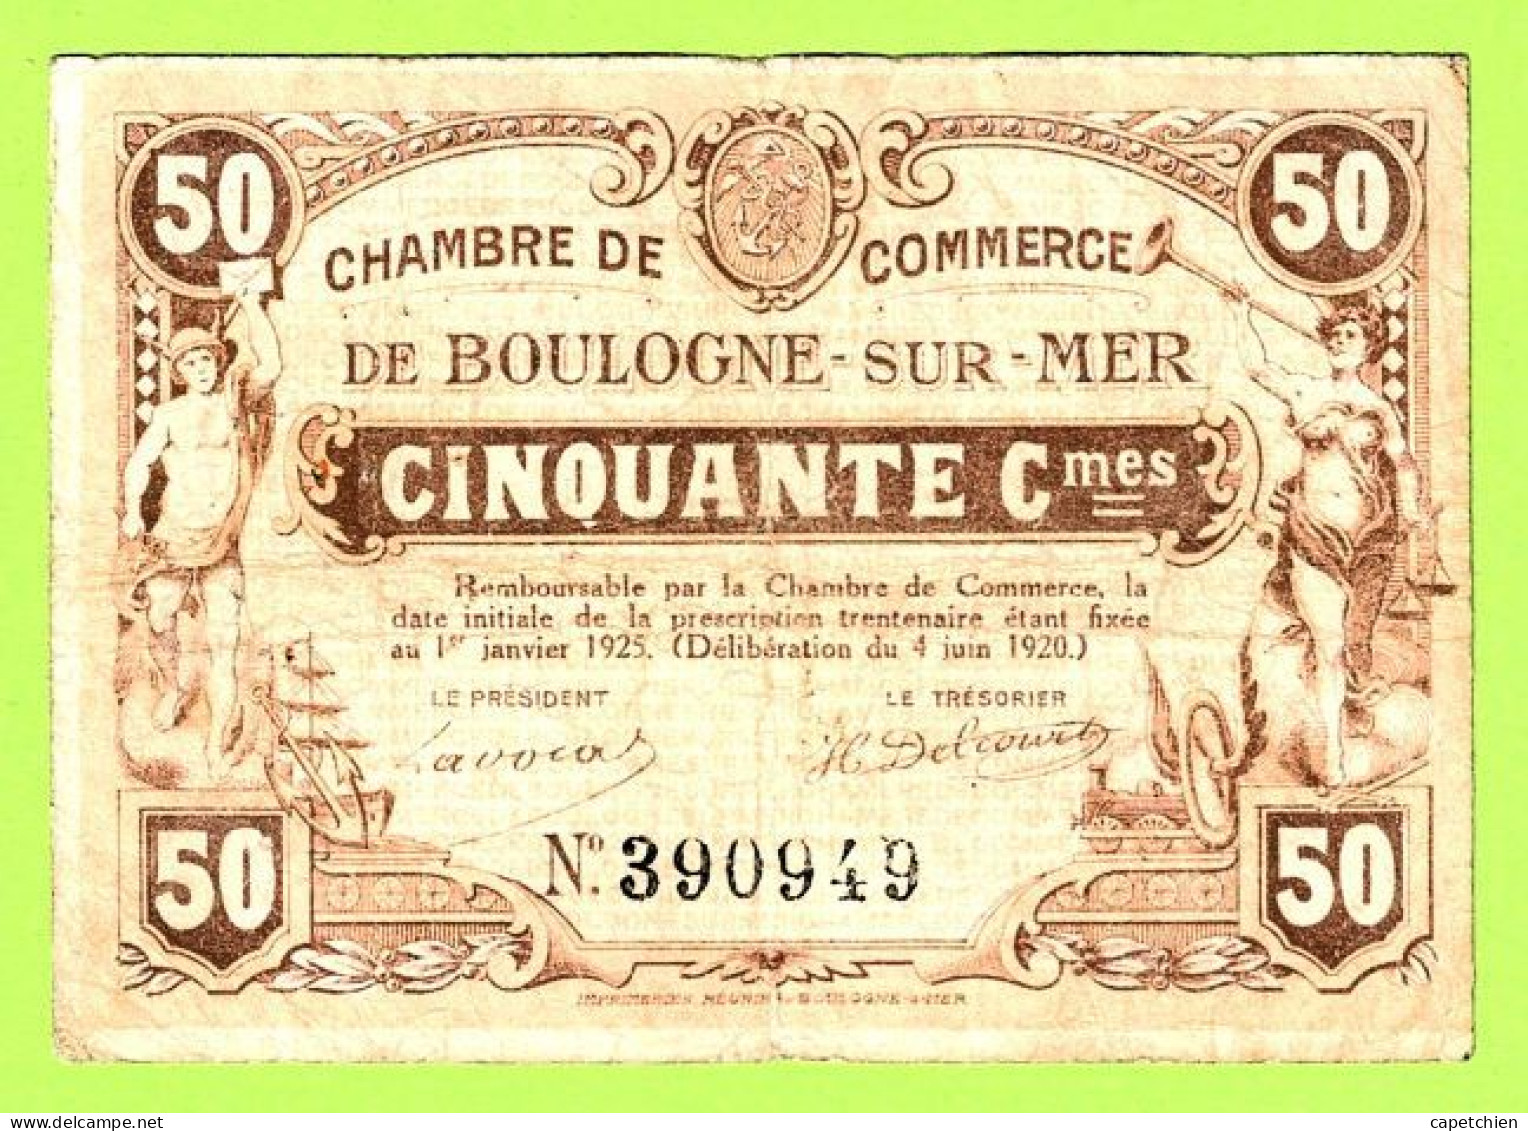 FRANCE / CHAMBRE De COMMERCE : BOULOGNE SUR MER / 50 CENTIMES / 4 UIN 1920  / N° 390949 - Chamber Of Commerce